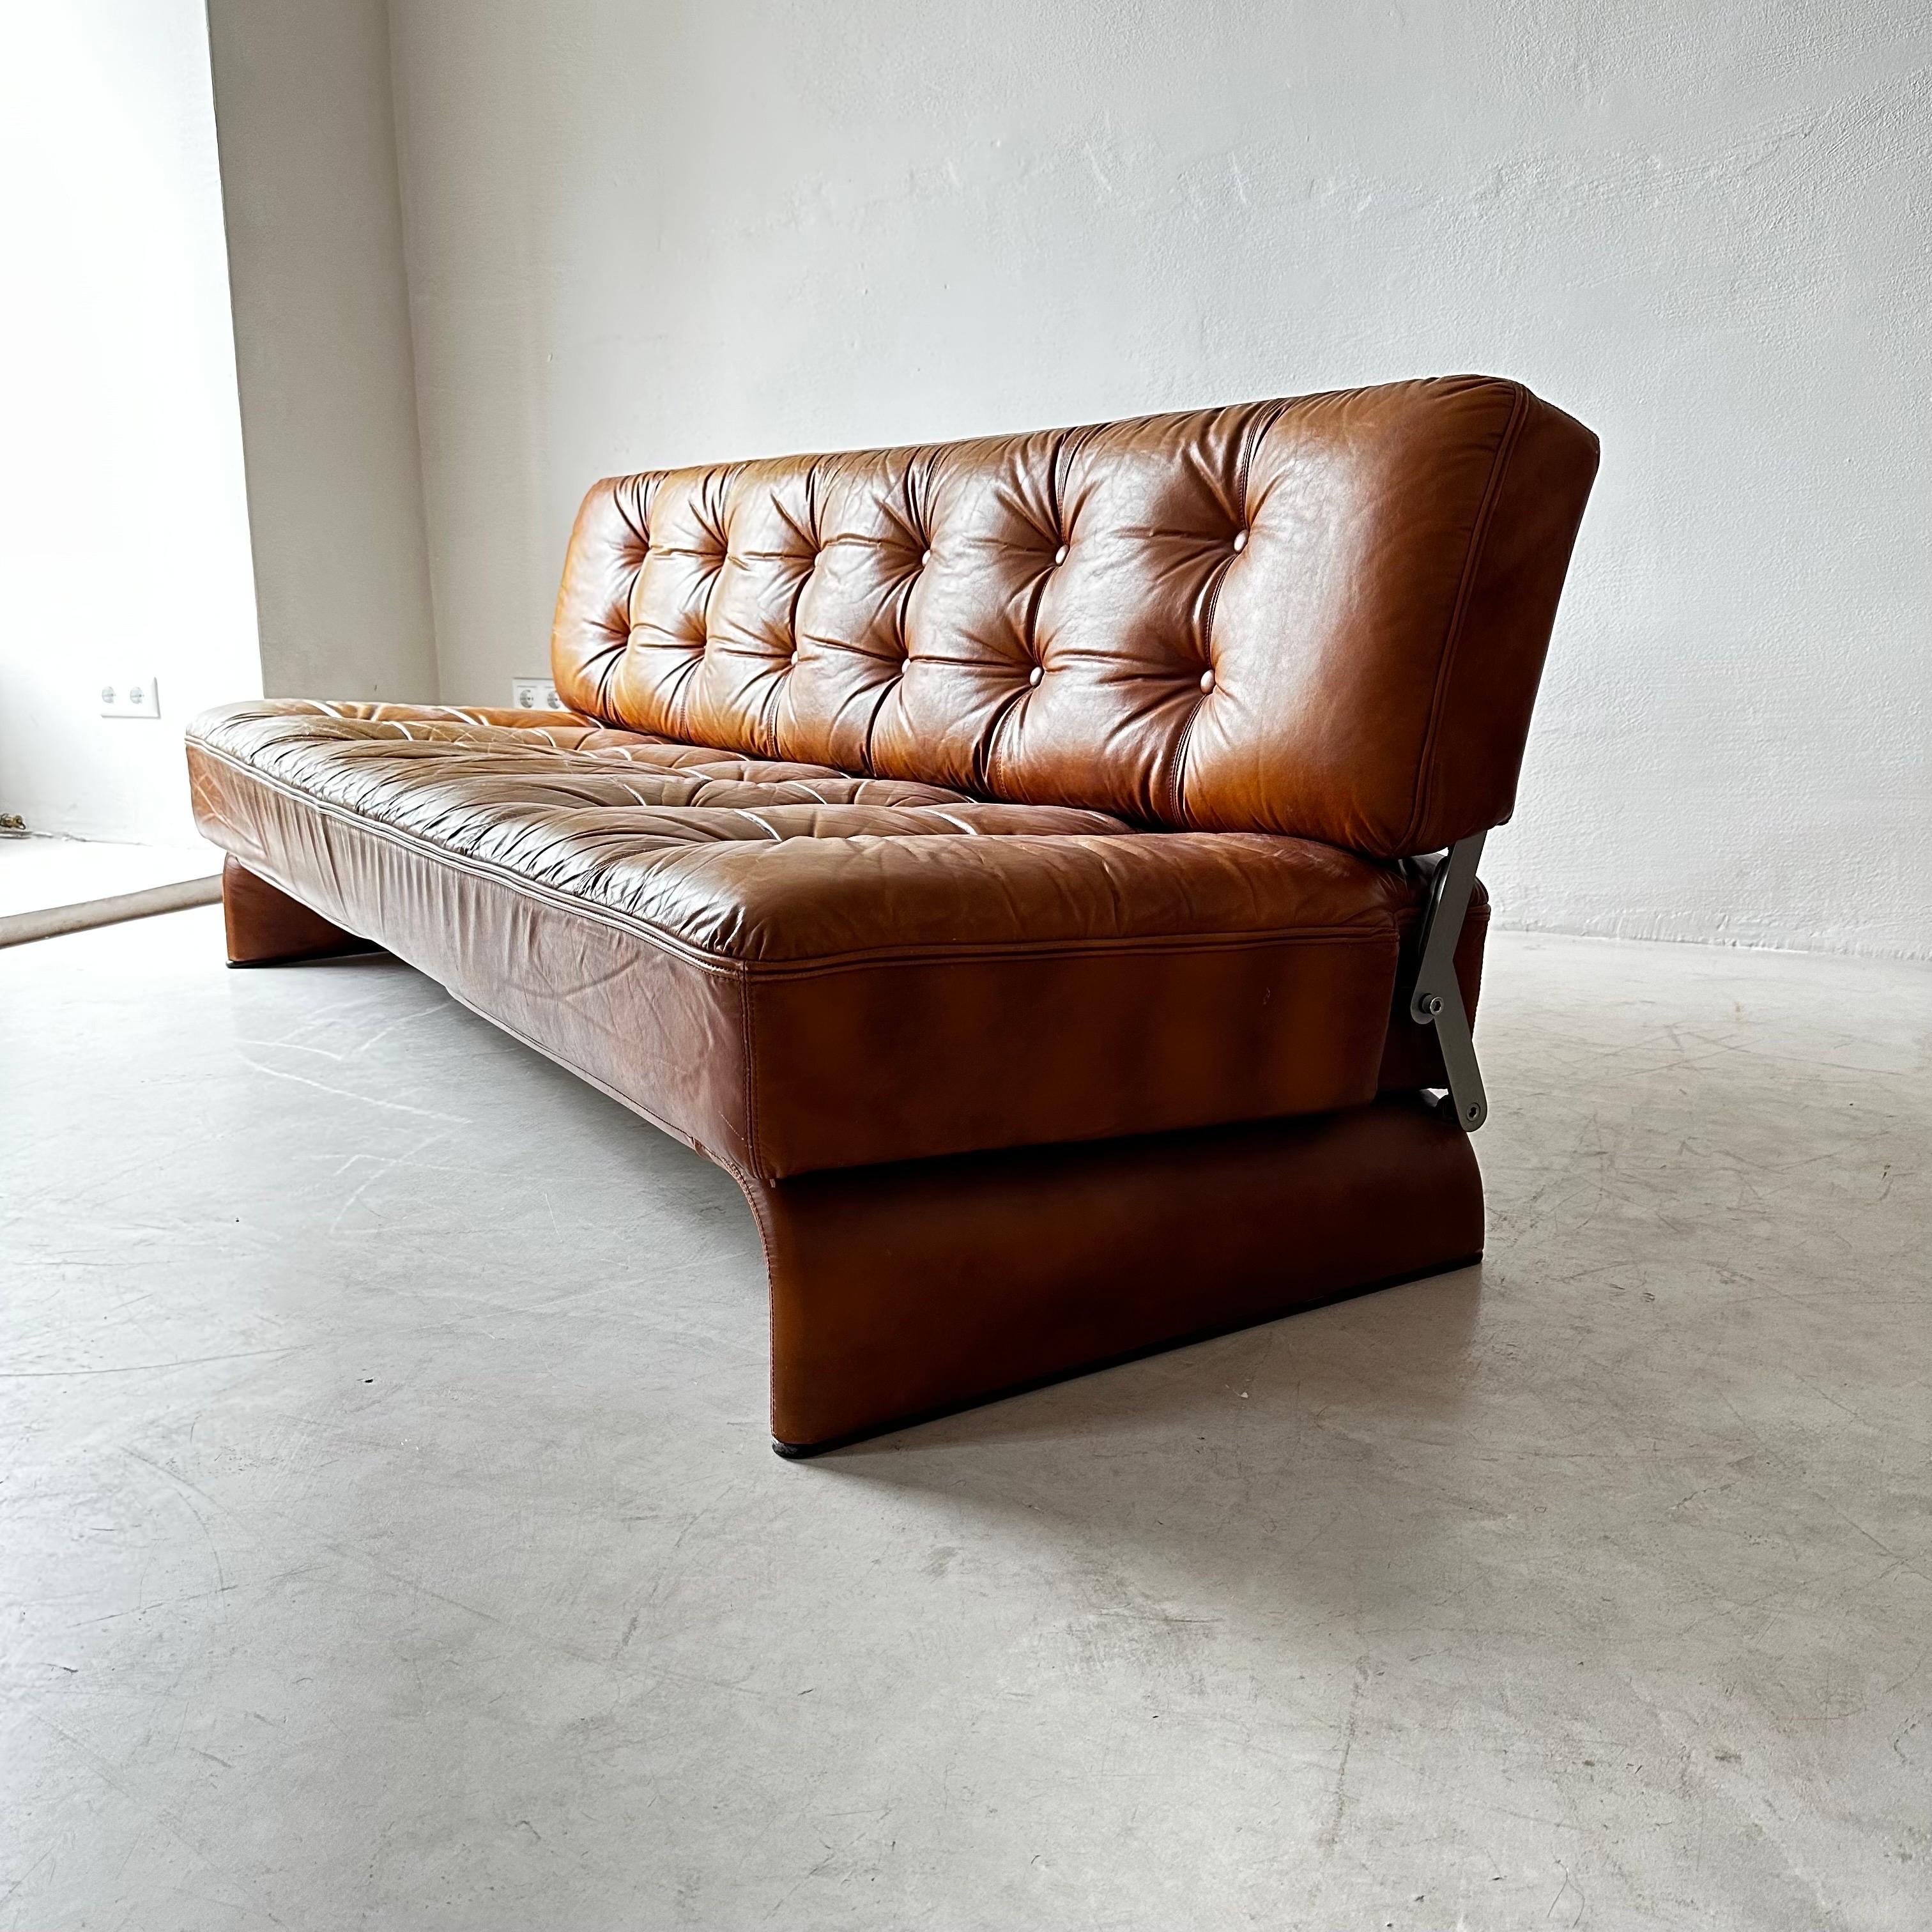 Mid-Century Modern Johannes Spalt for Wittmann 'Constanze' Sofa in Cognac Leather For Sale